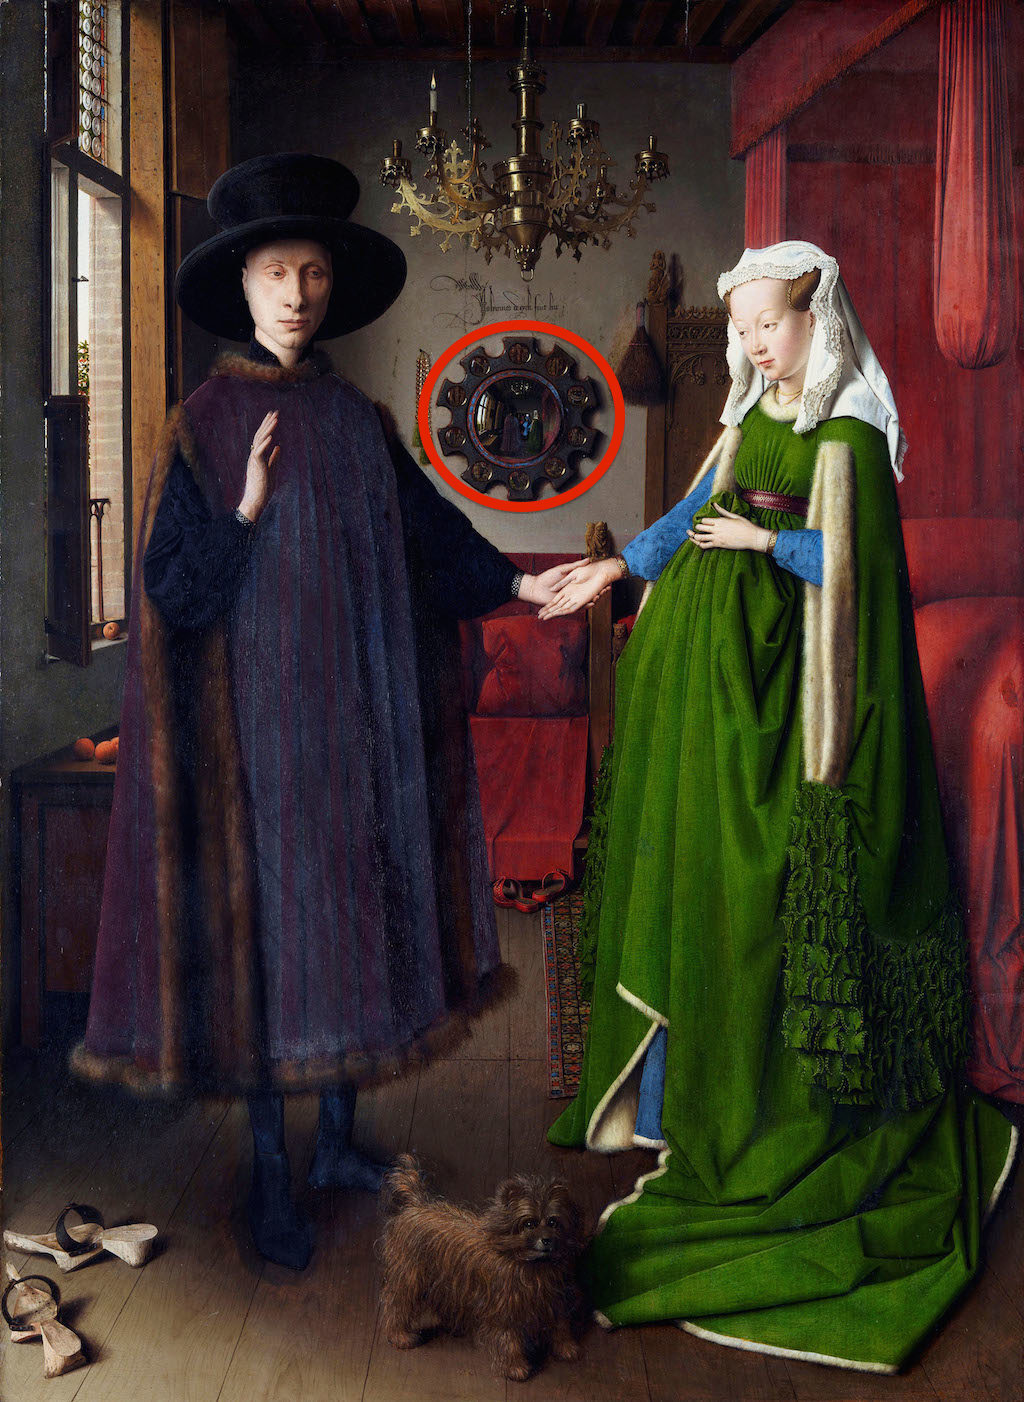 DHXB1X The Arnolfini Portrait - by Jan van Eyck, 1434